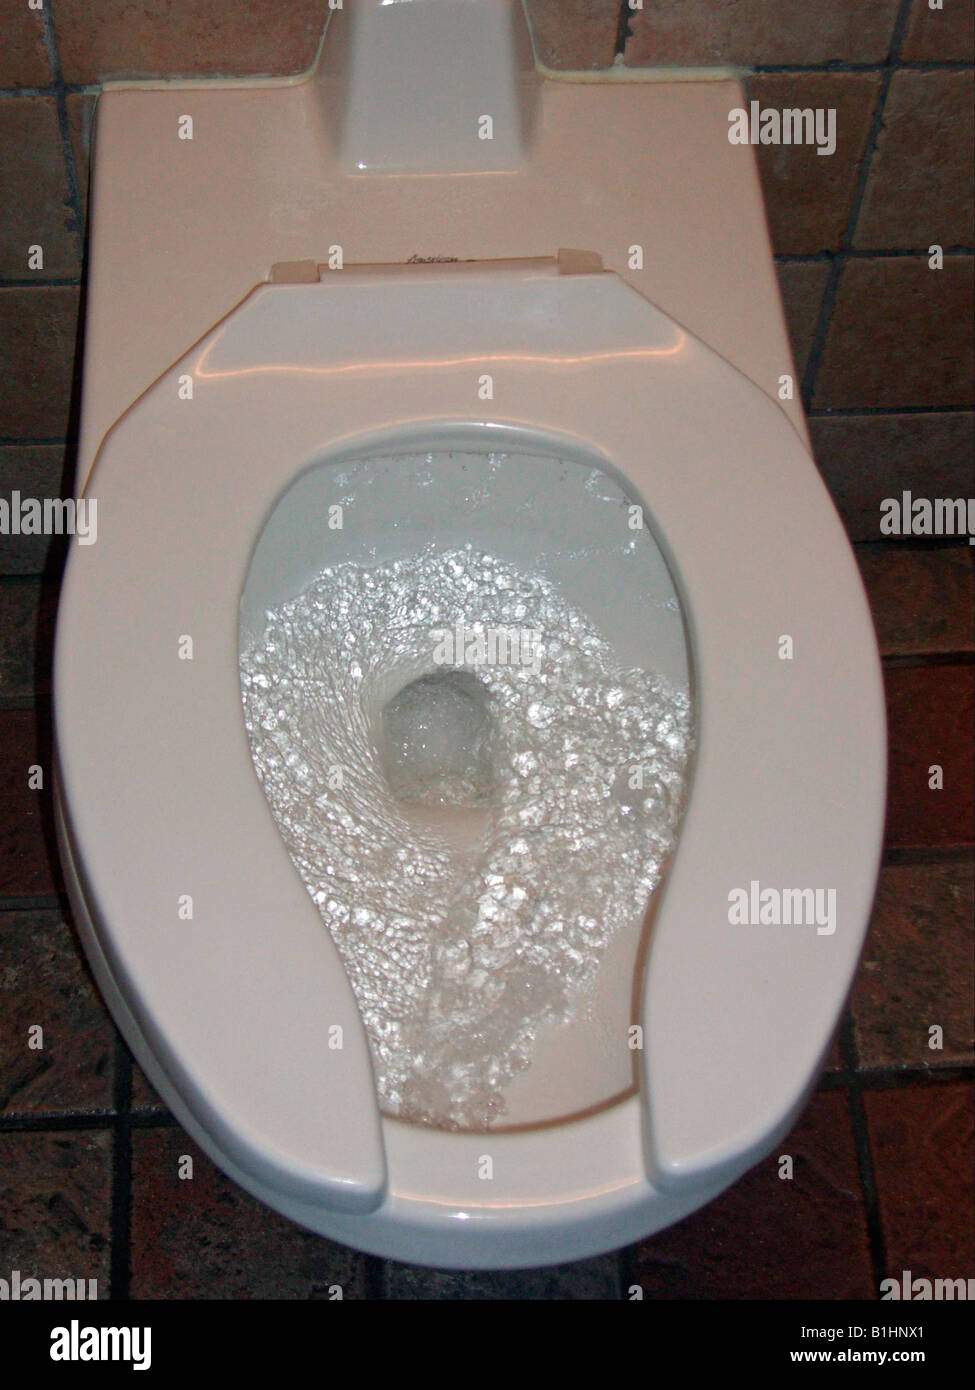 Aseo de Flushing Foto de stock